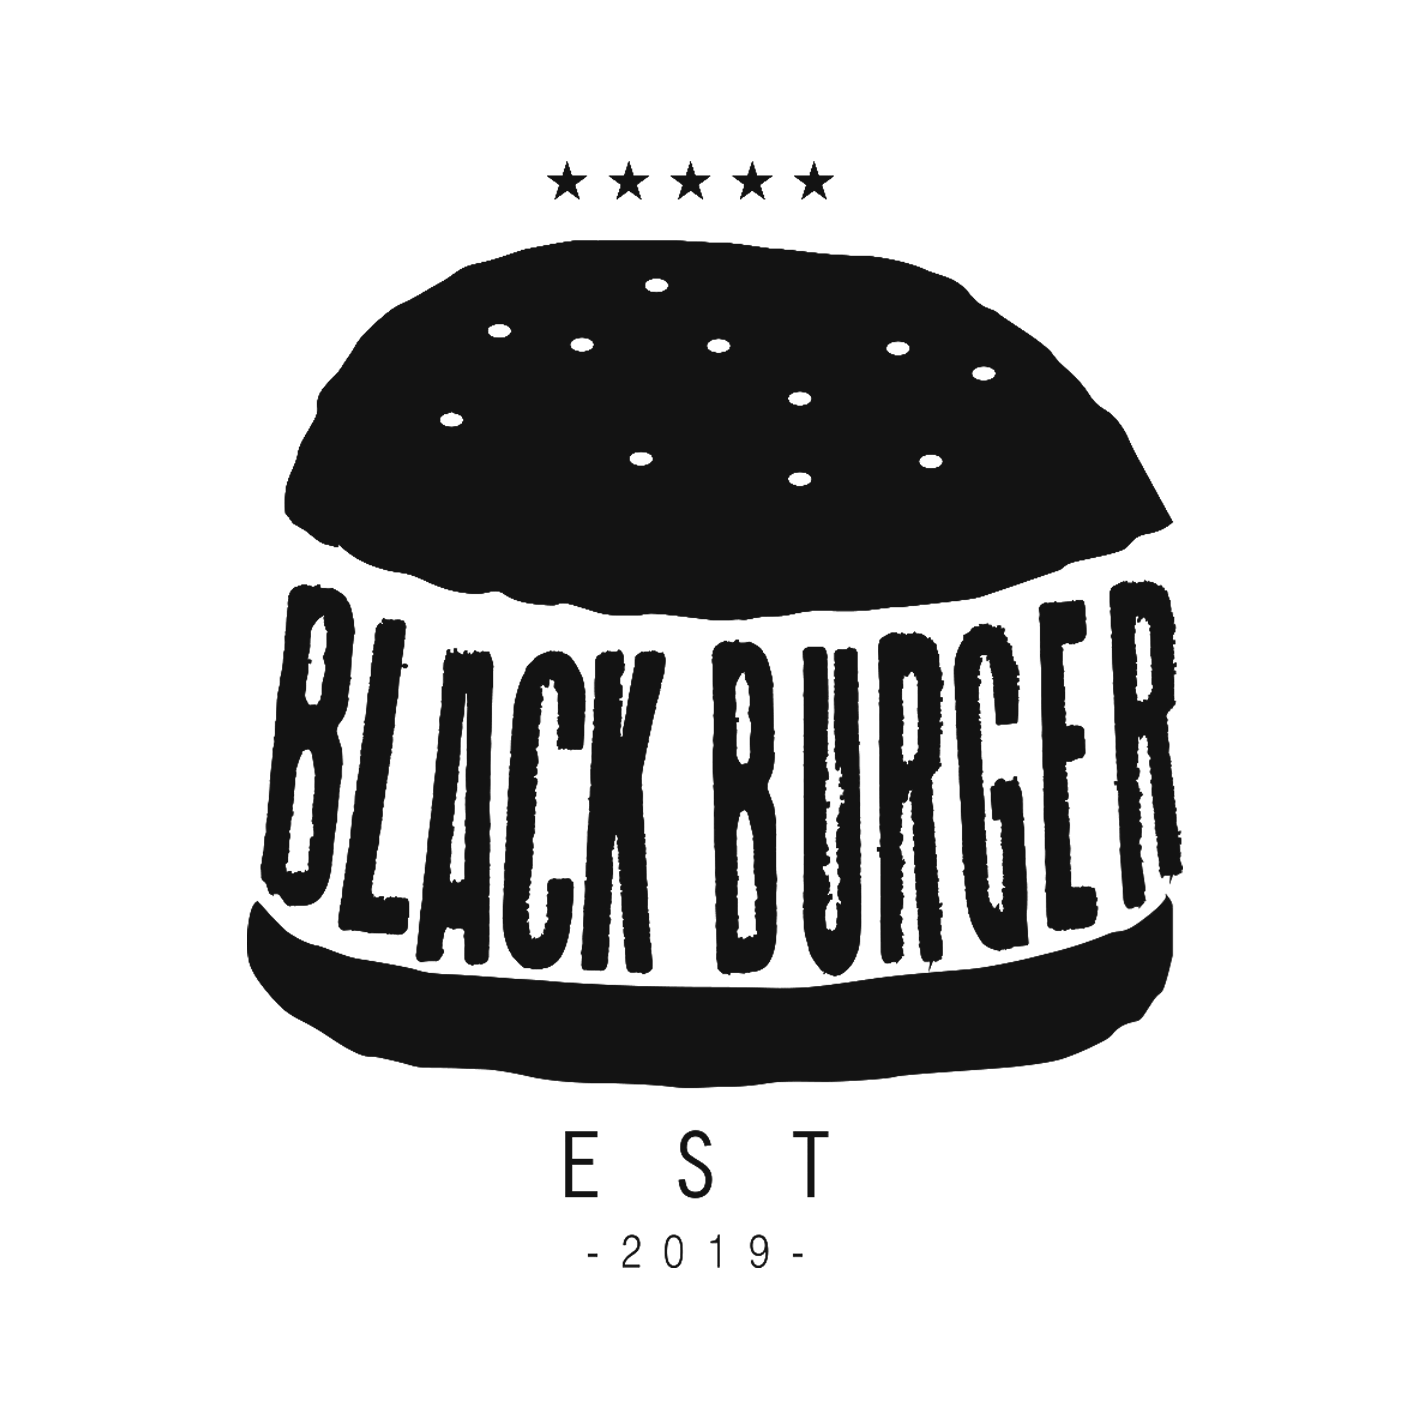 Imagen de Black burger